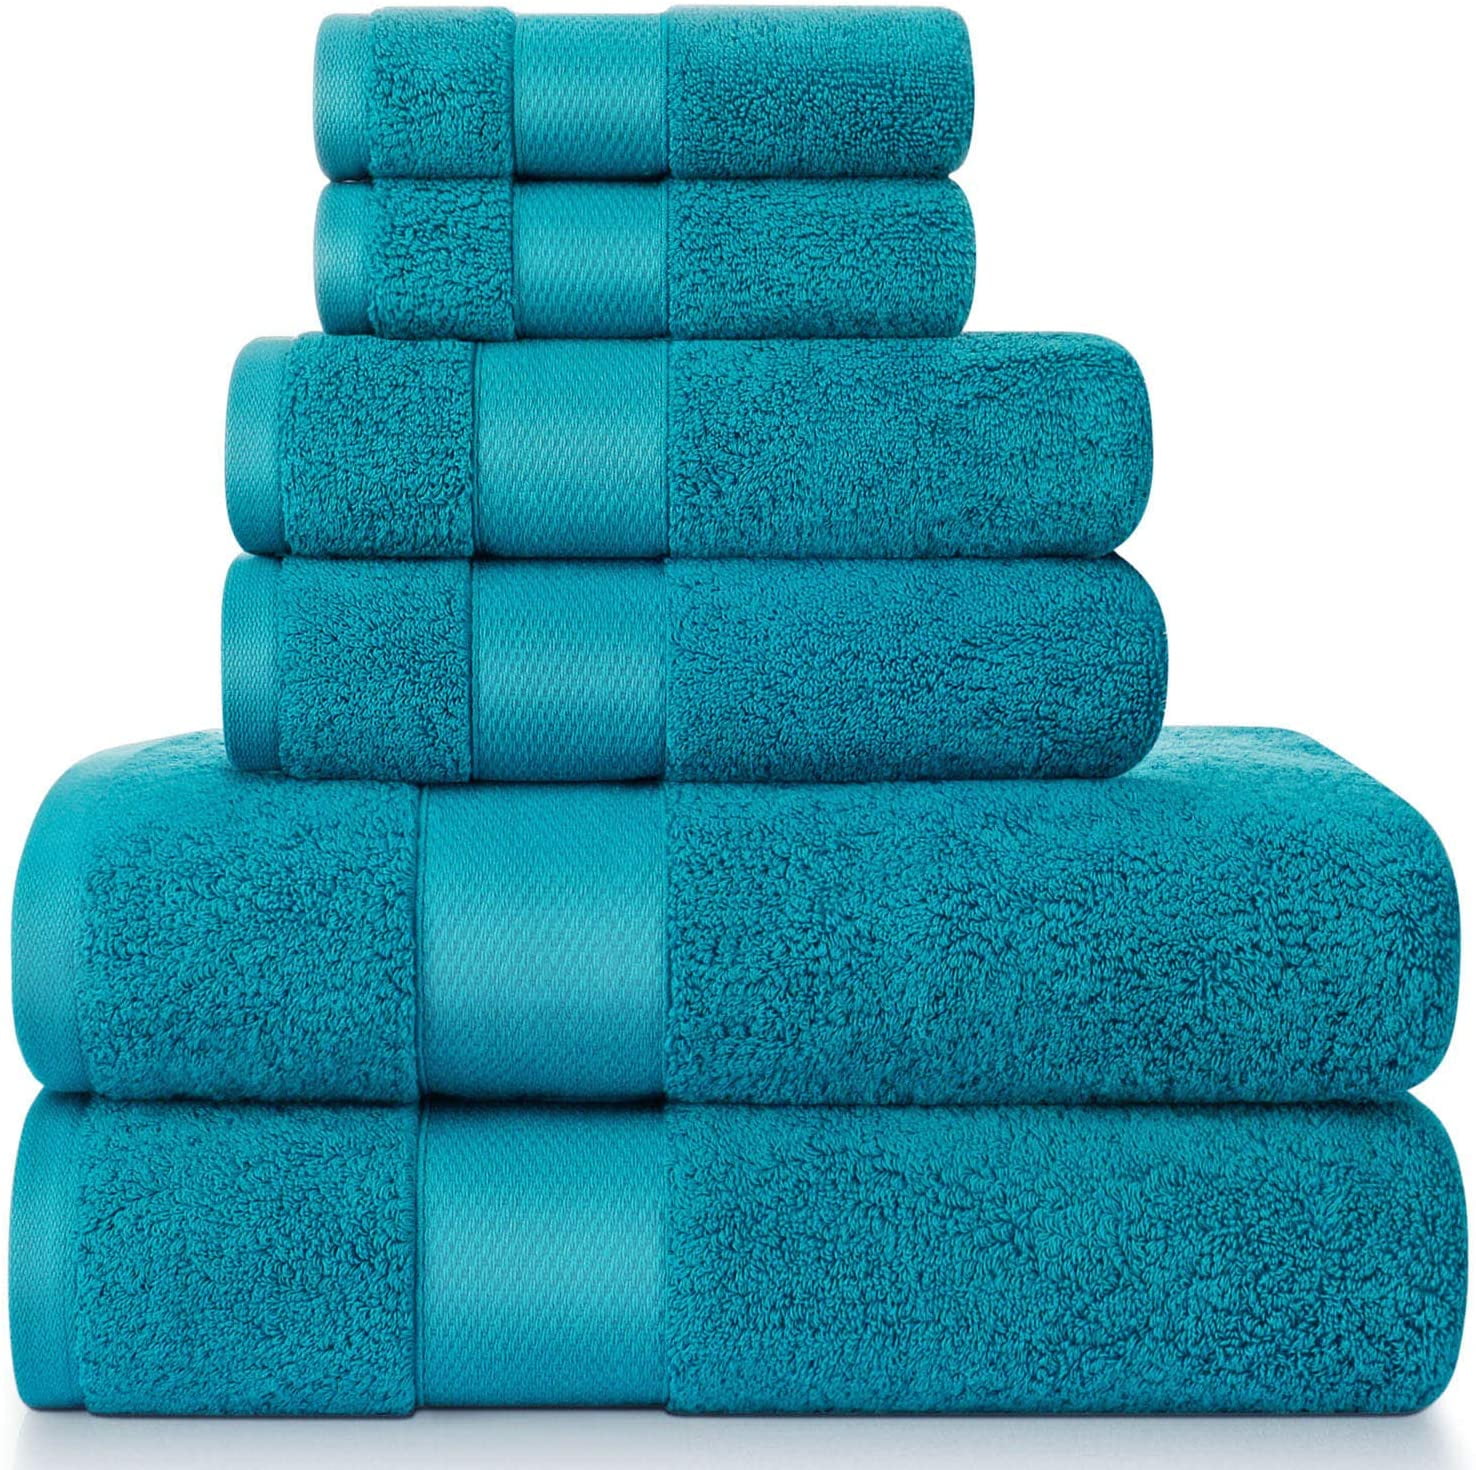 Pure Cotton Towel Set 600 GSM Bath Sheet Hand Large Bale Bathroom Luxury 6 Piece 